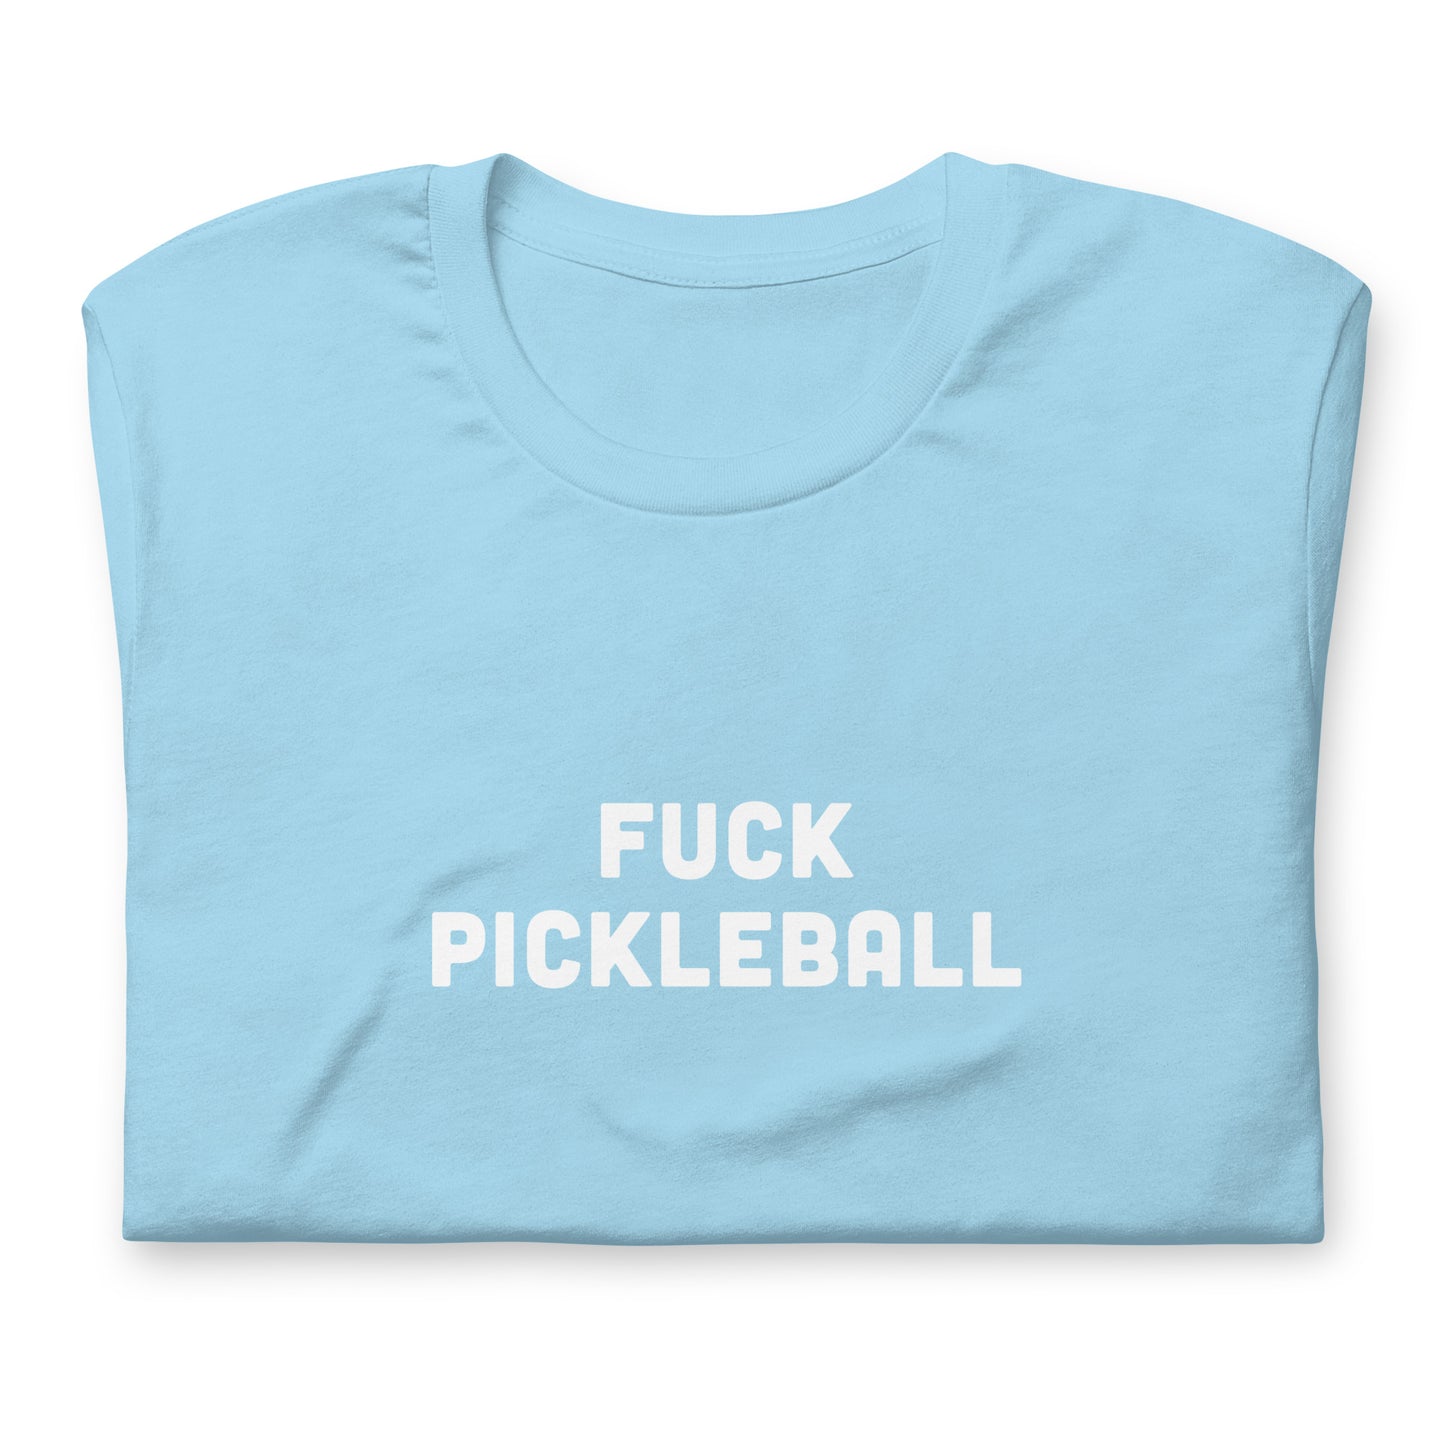 Fuck Pickleball T-Shirt Size M Color Asphalt